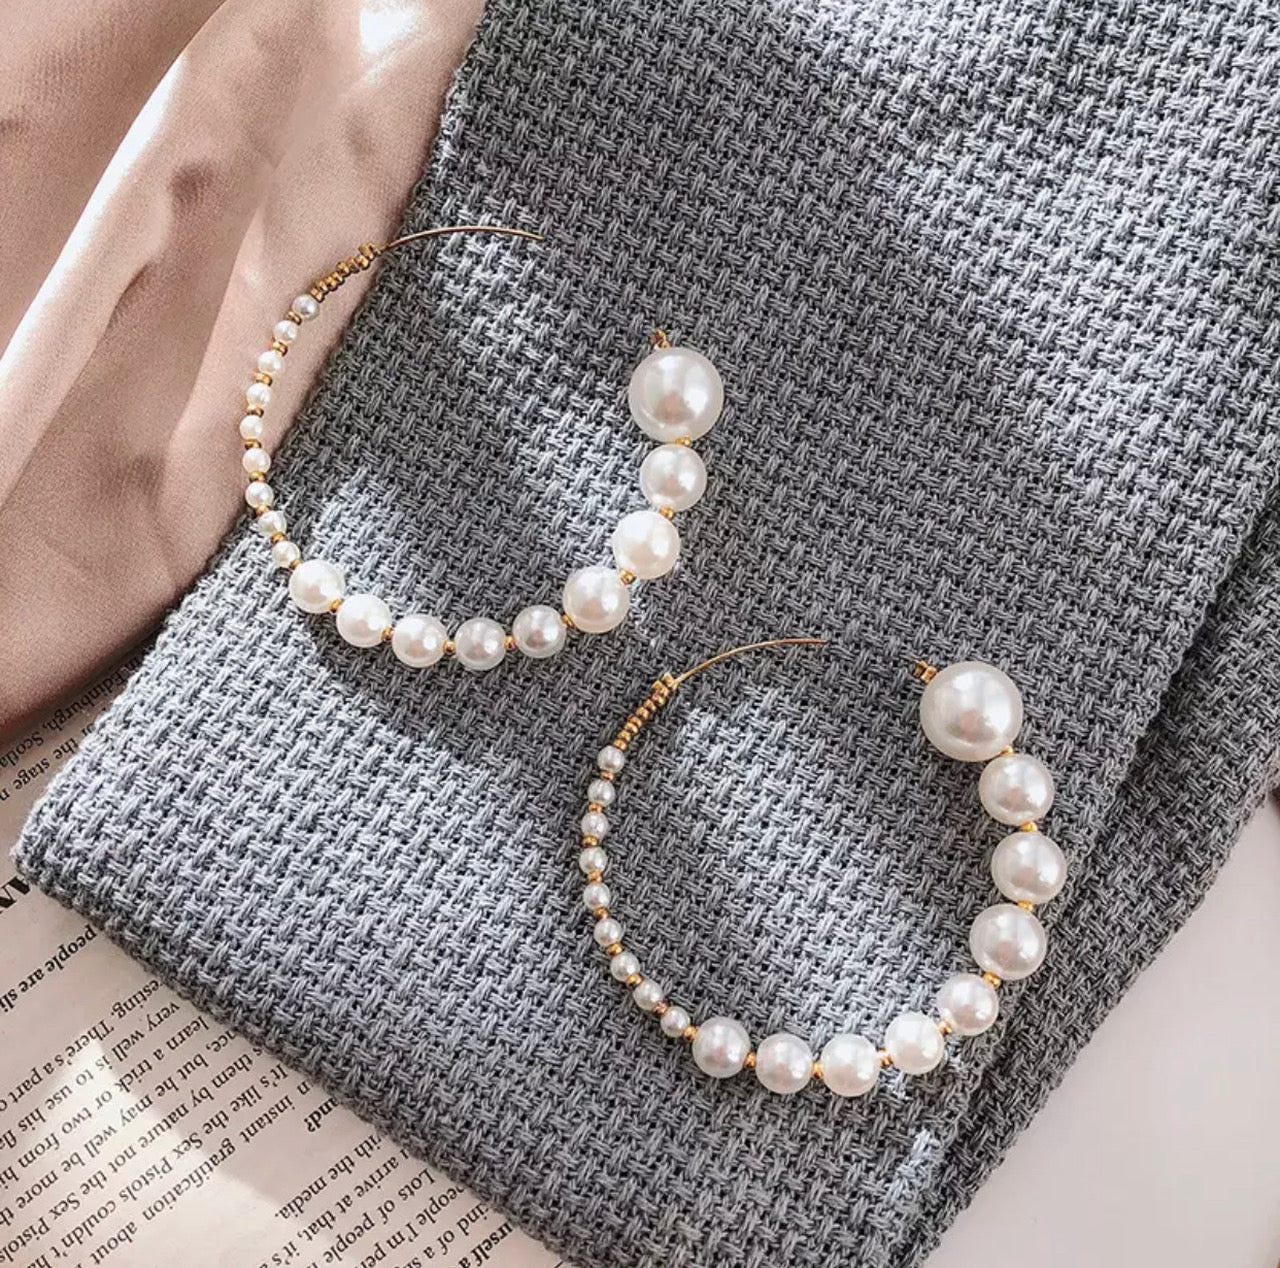 Pearl balls